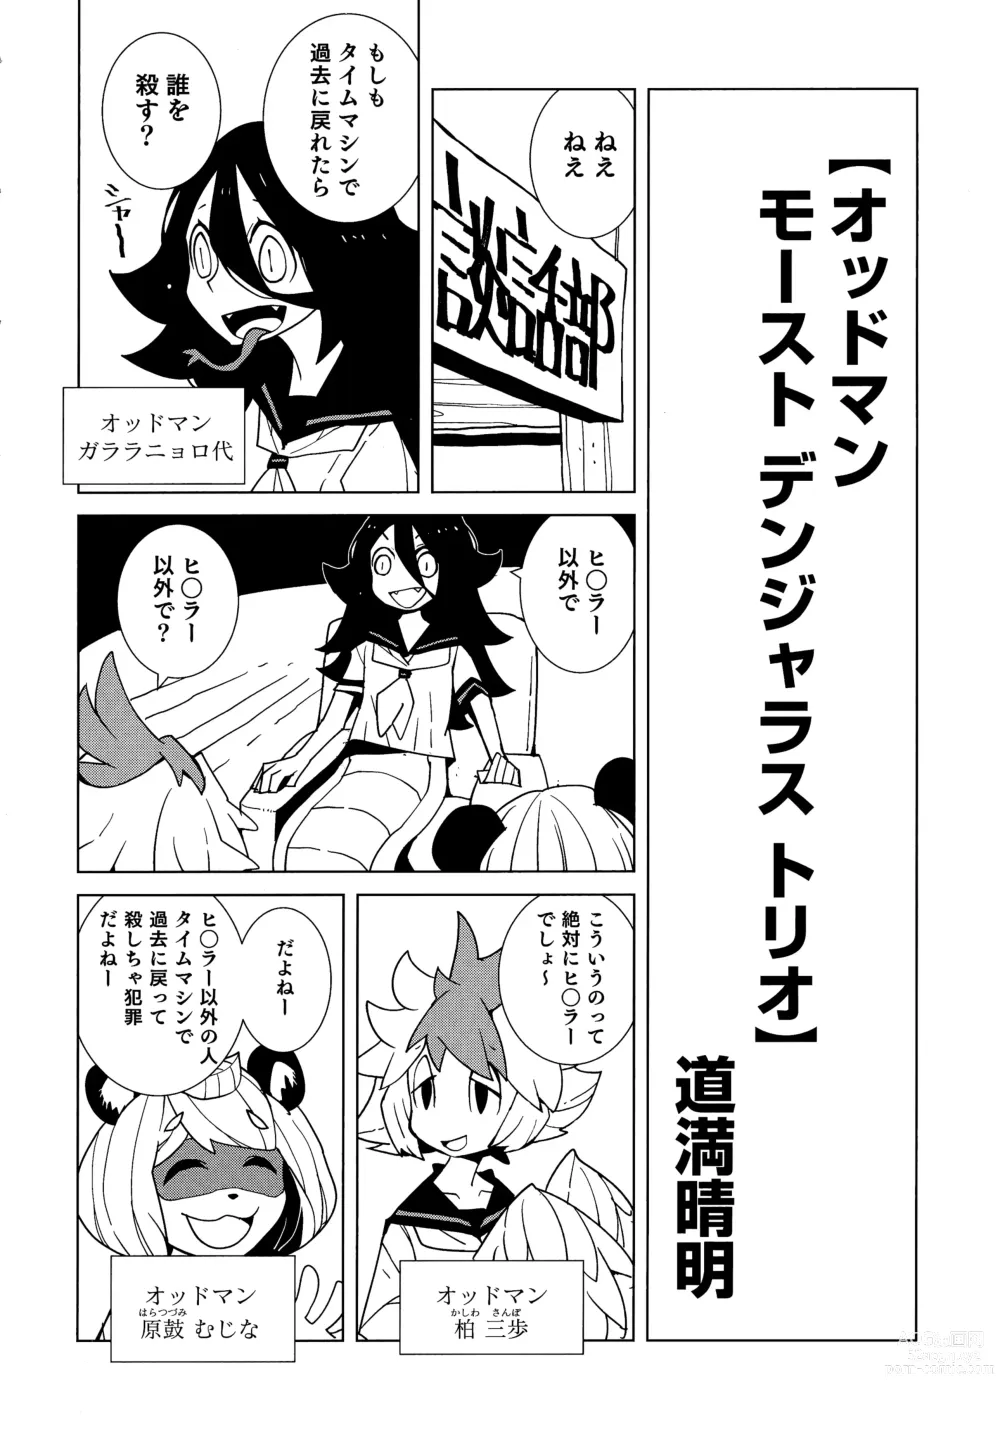 Page 97 of manga HotMilk Festival All Star Comic